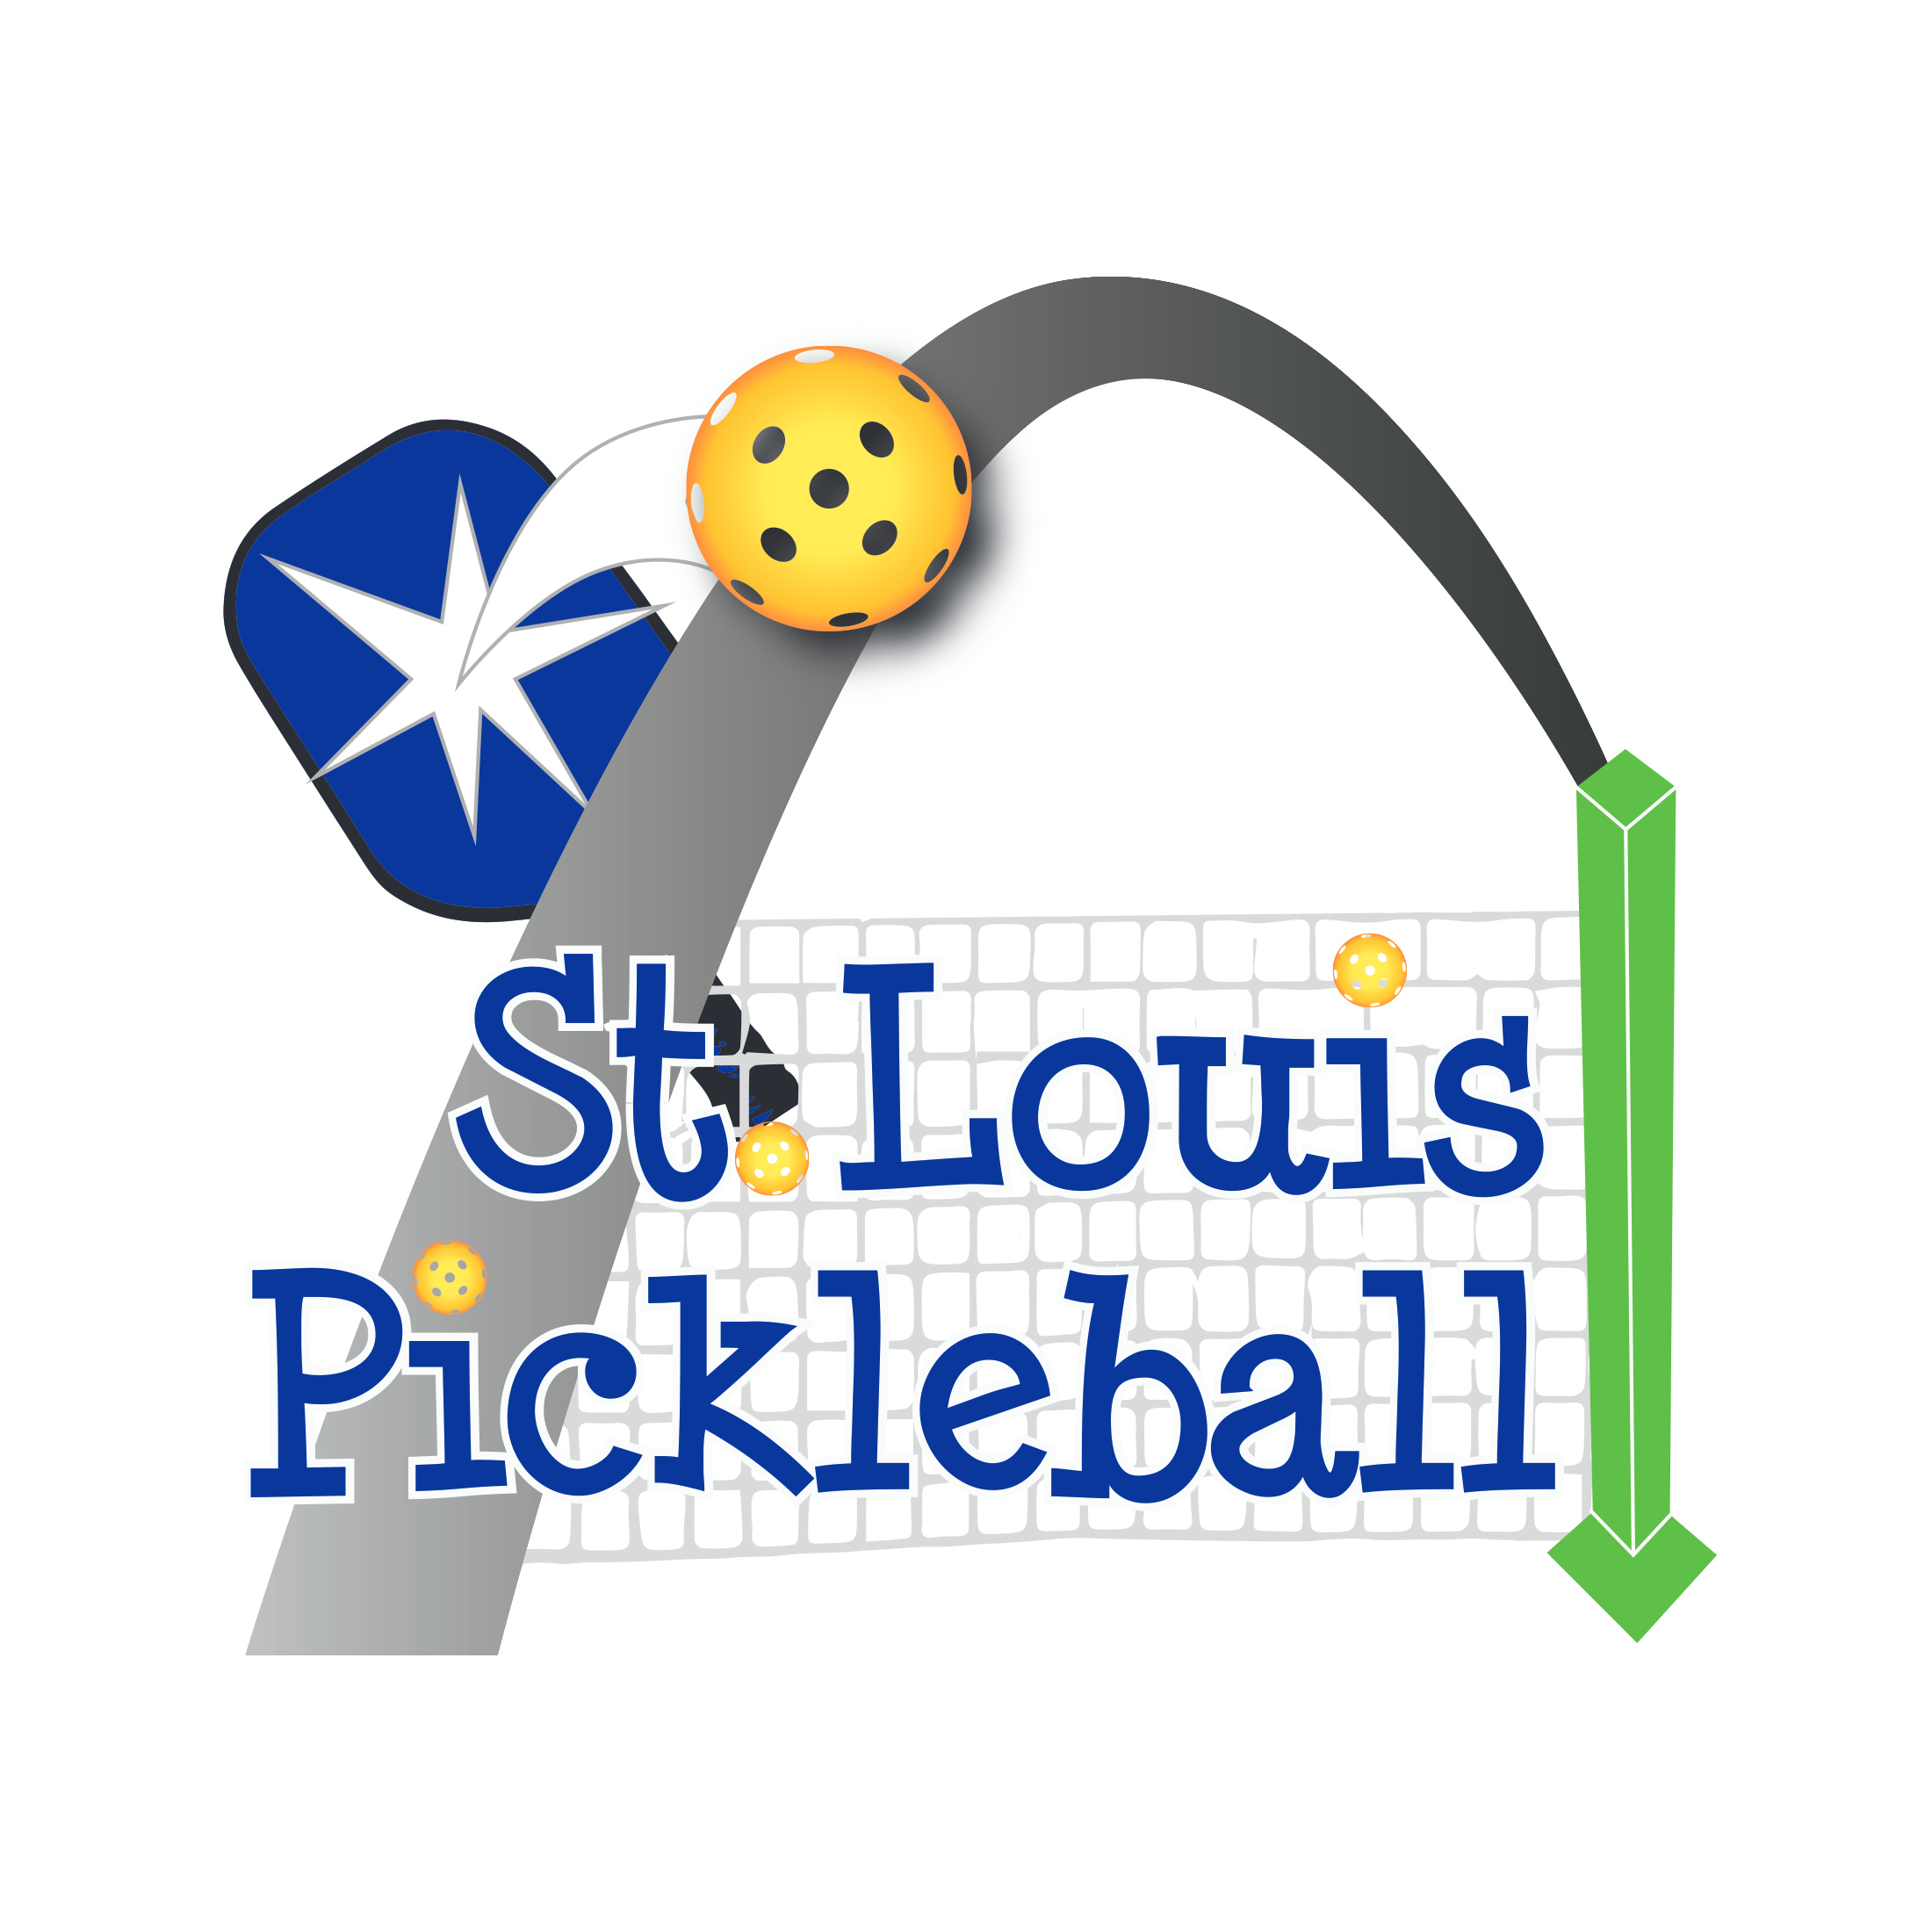 StLouisPickleball logo-edited